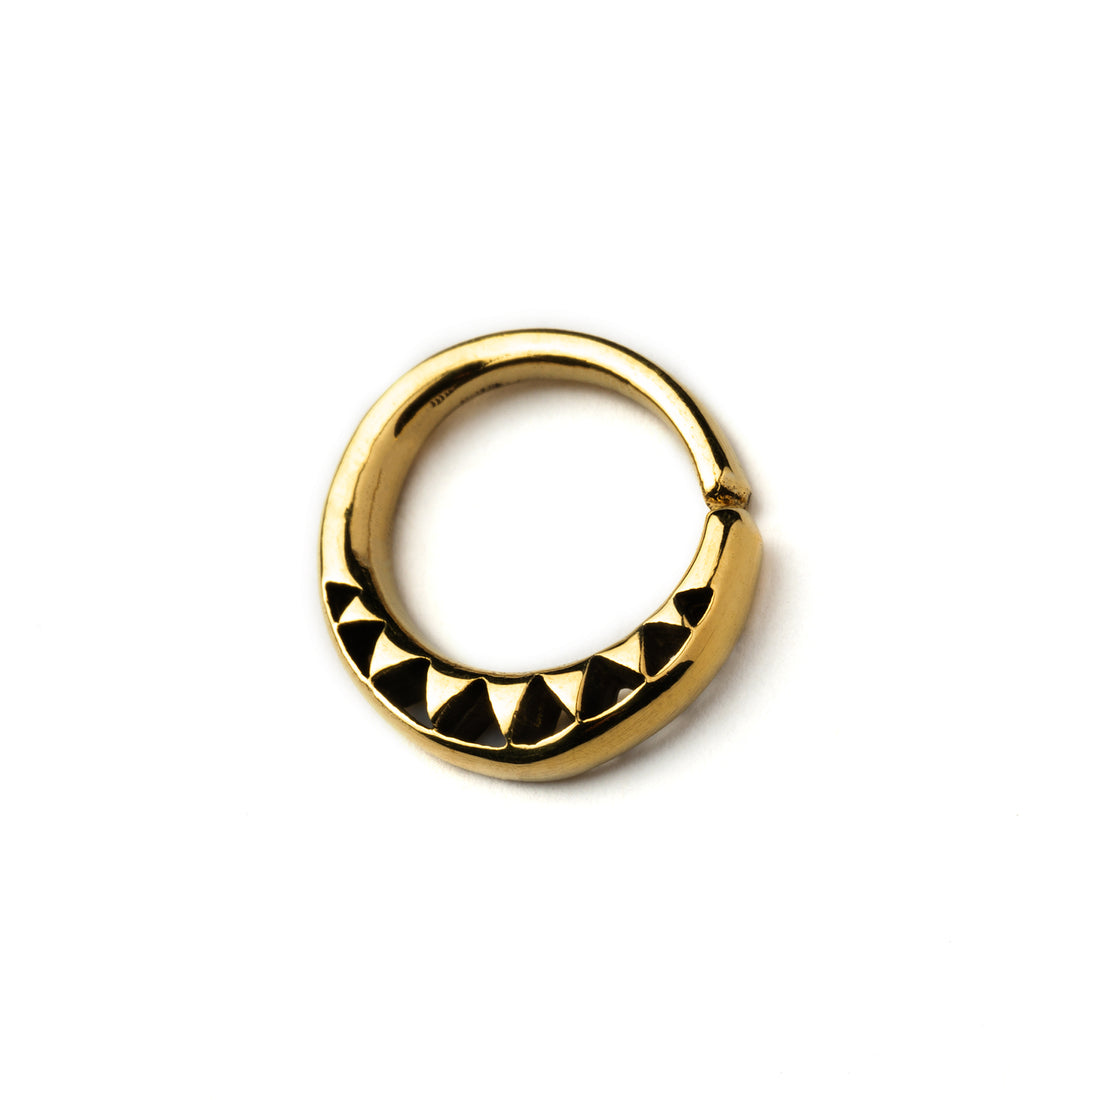 Aja golden brass septum piercing ring right side view